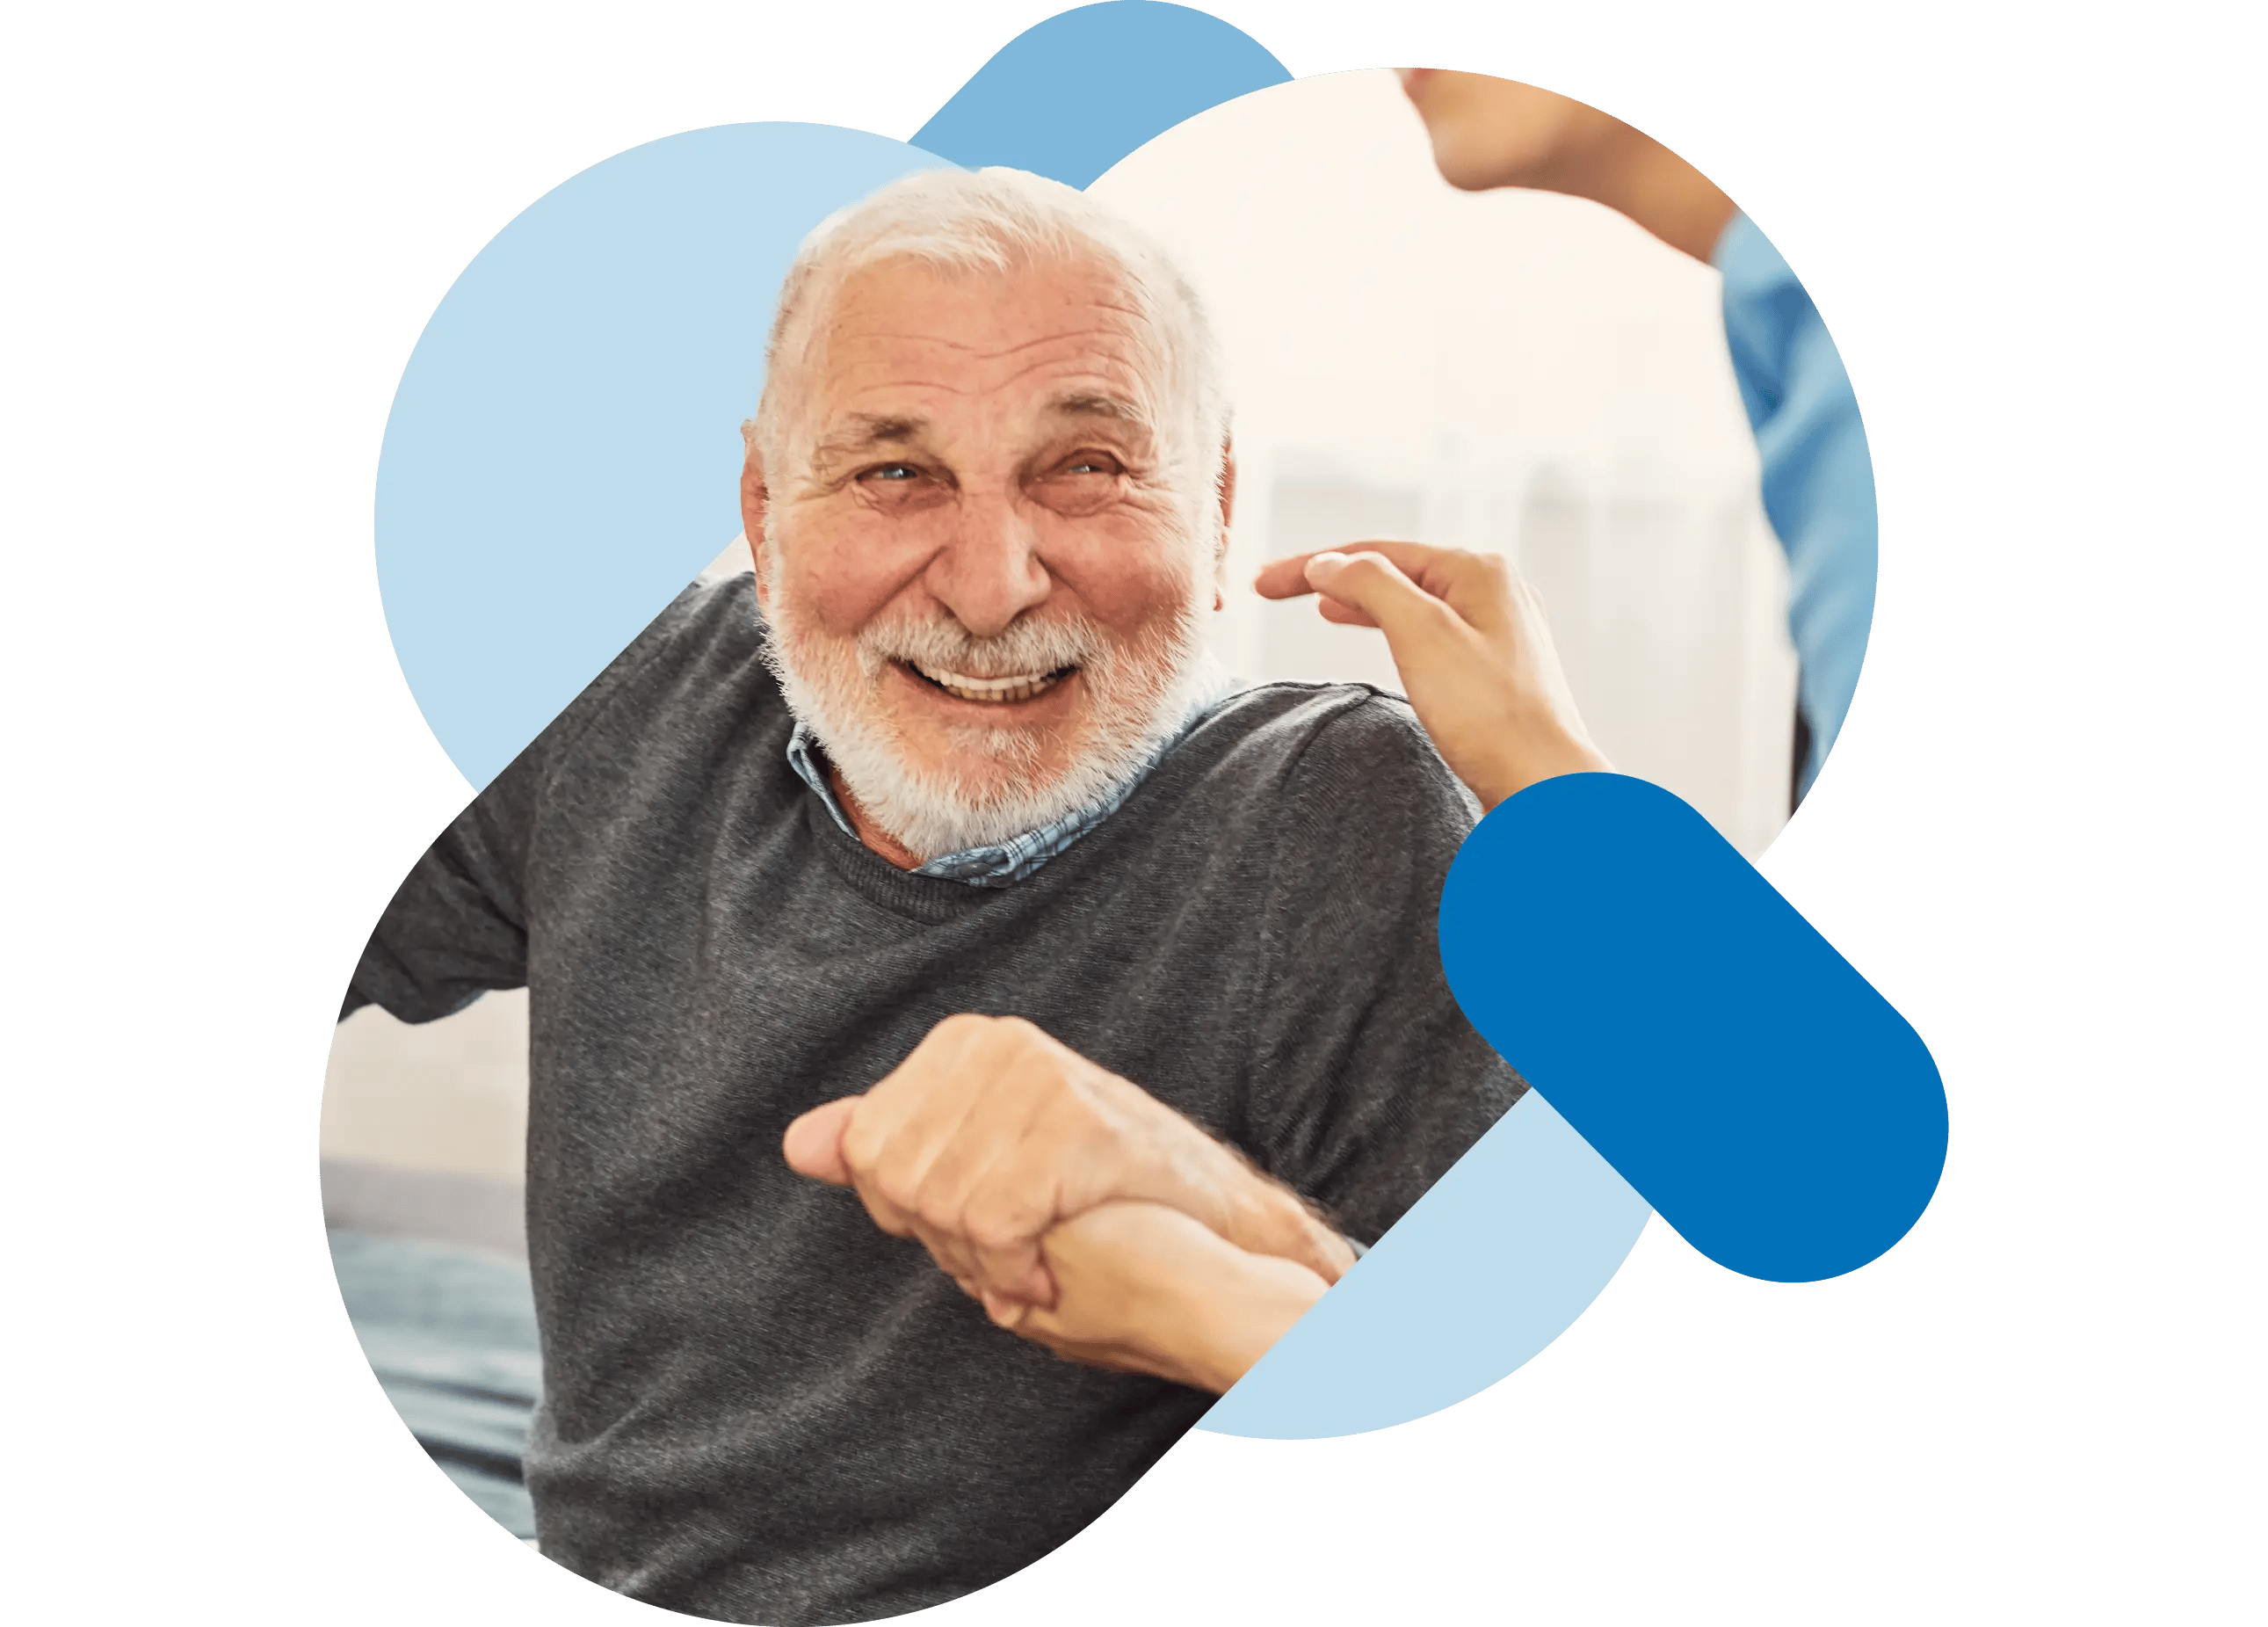 A smiling elderly gentleman in a grey jumper